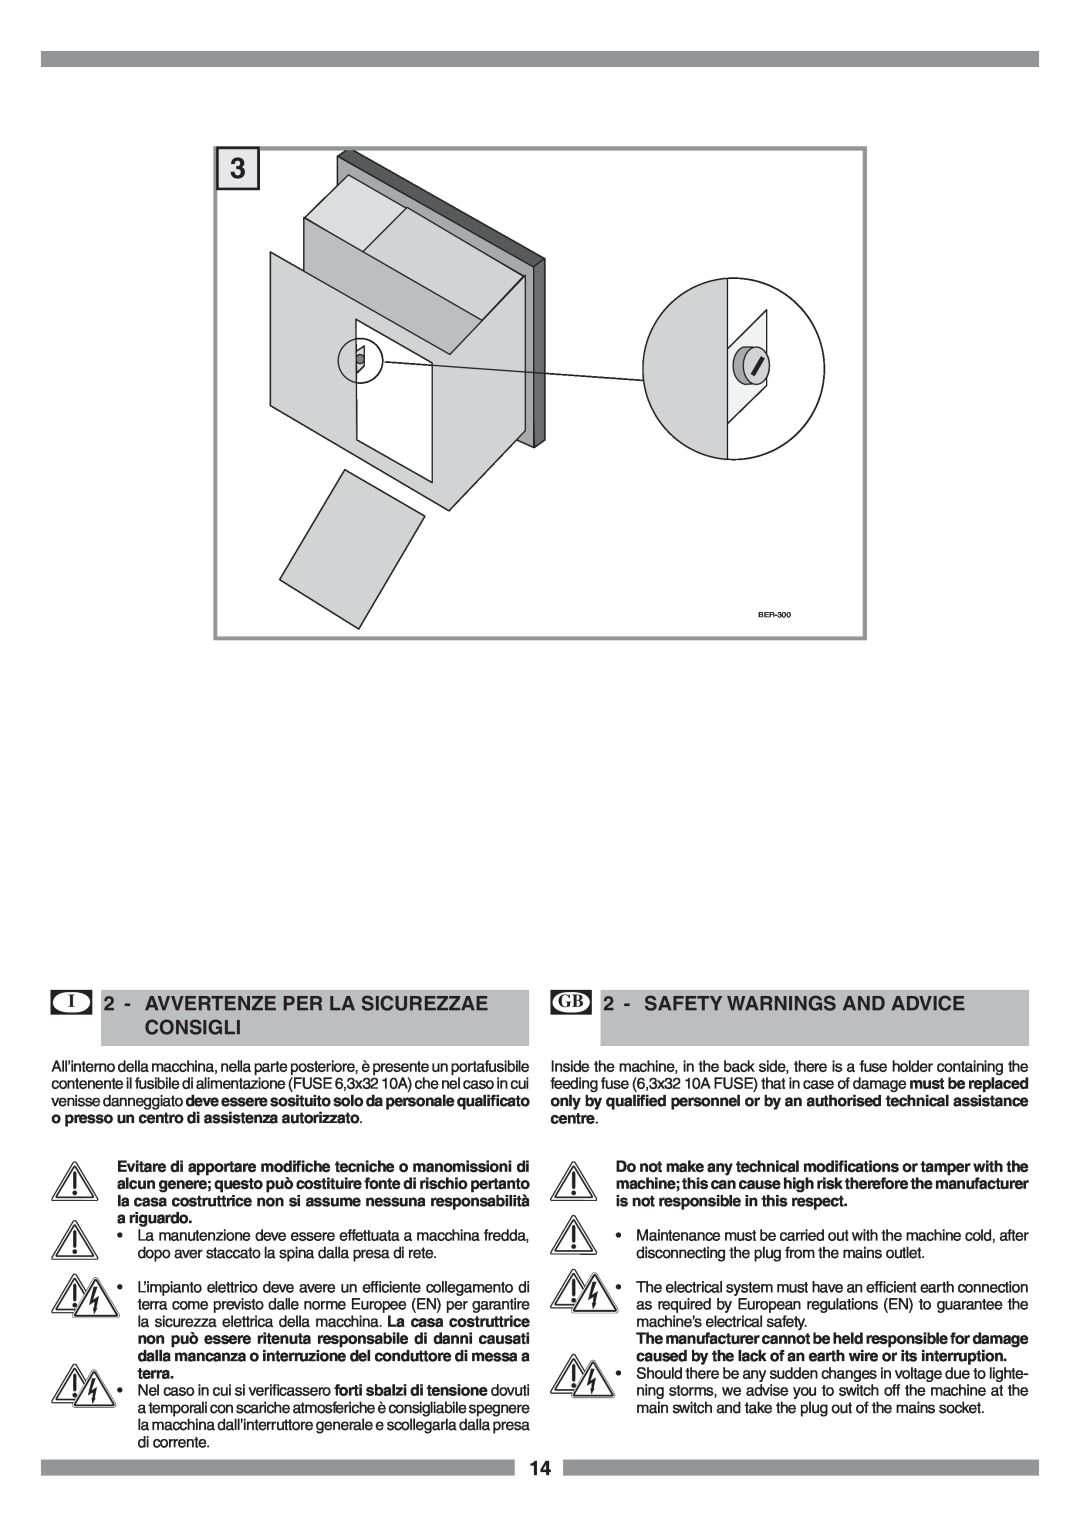 Smeg SCM1 manual I 2 - AVVERTENZE PER LA SICUREZZAE, Consigli, GB 2 - SAFETY WARNINGS AND ADVICE, BER-300 